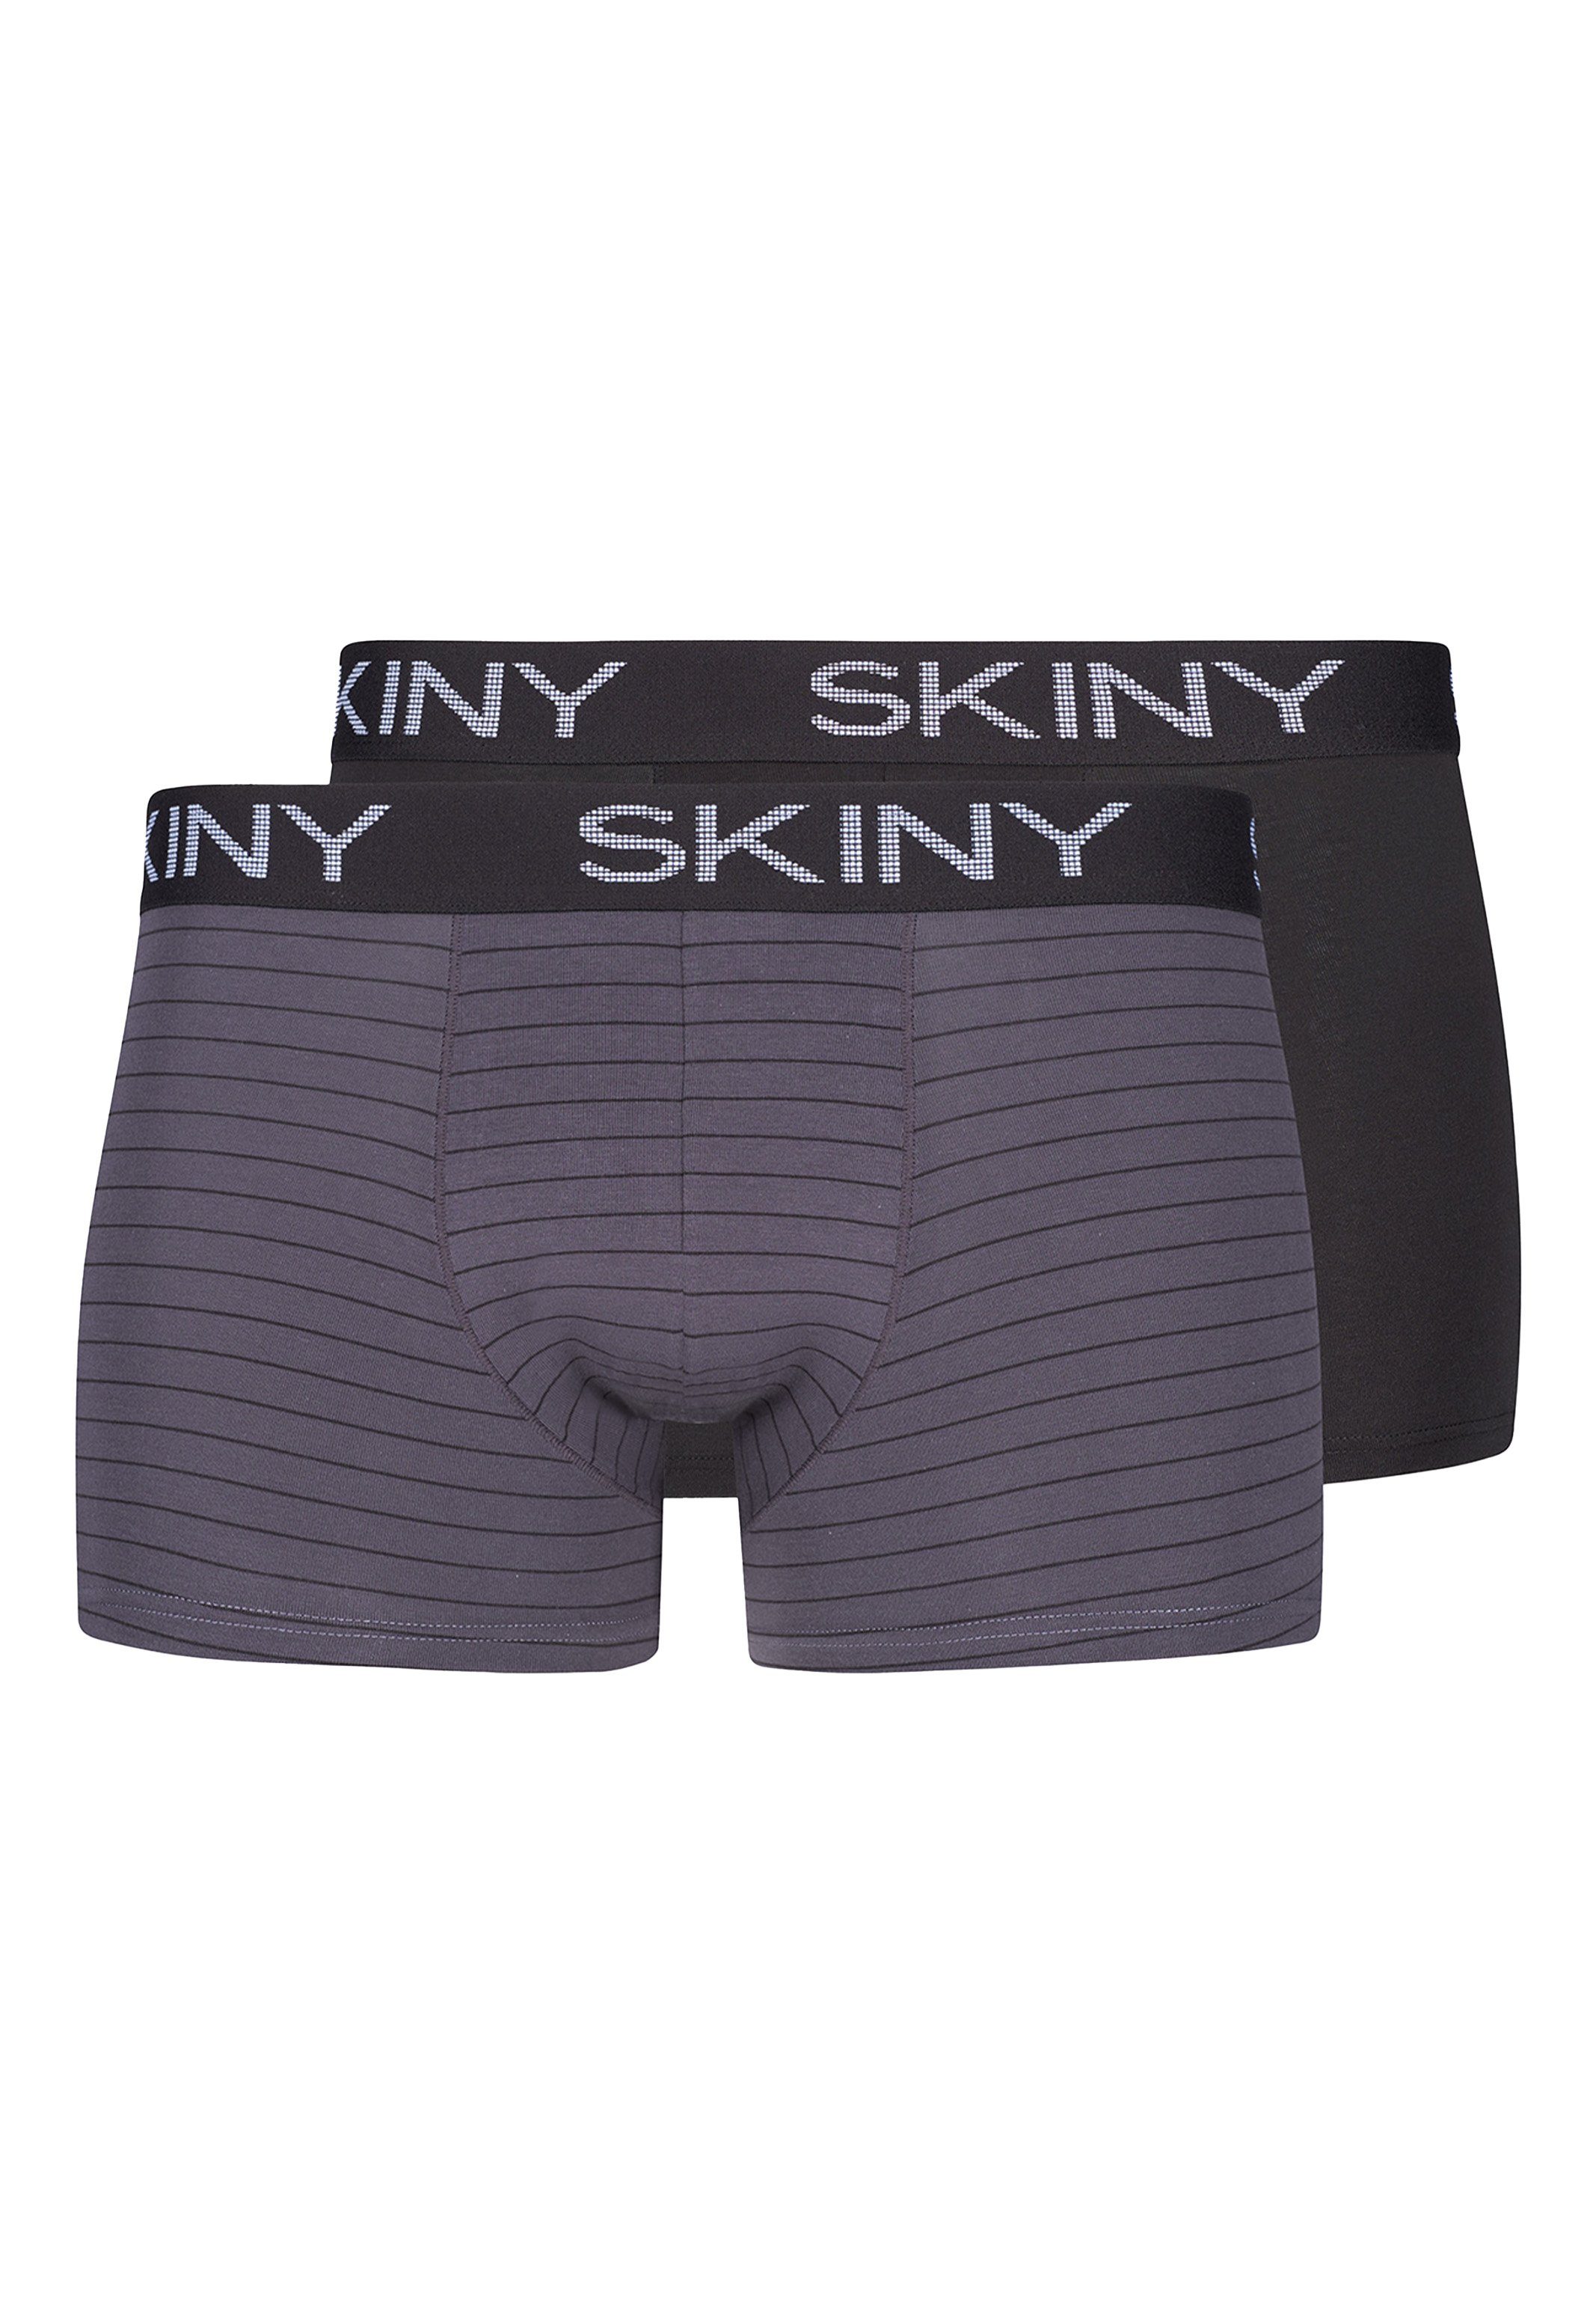 Skiny Retro Boxer 2er Pack Cotton (Spar-Set, 2-St) Retro Short / Pant - Baumwolle - Ohne Eingriff - Körpernaher Passform Anthracite Stripe Selection